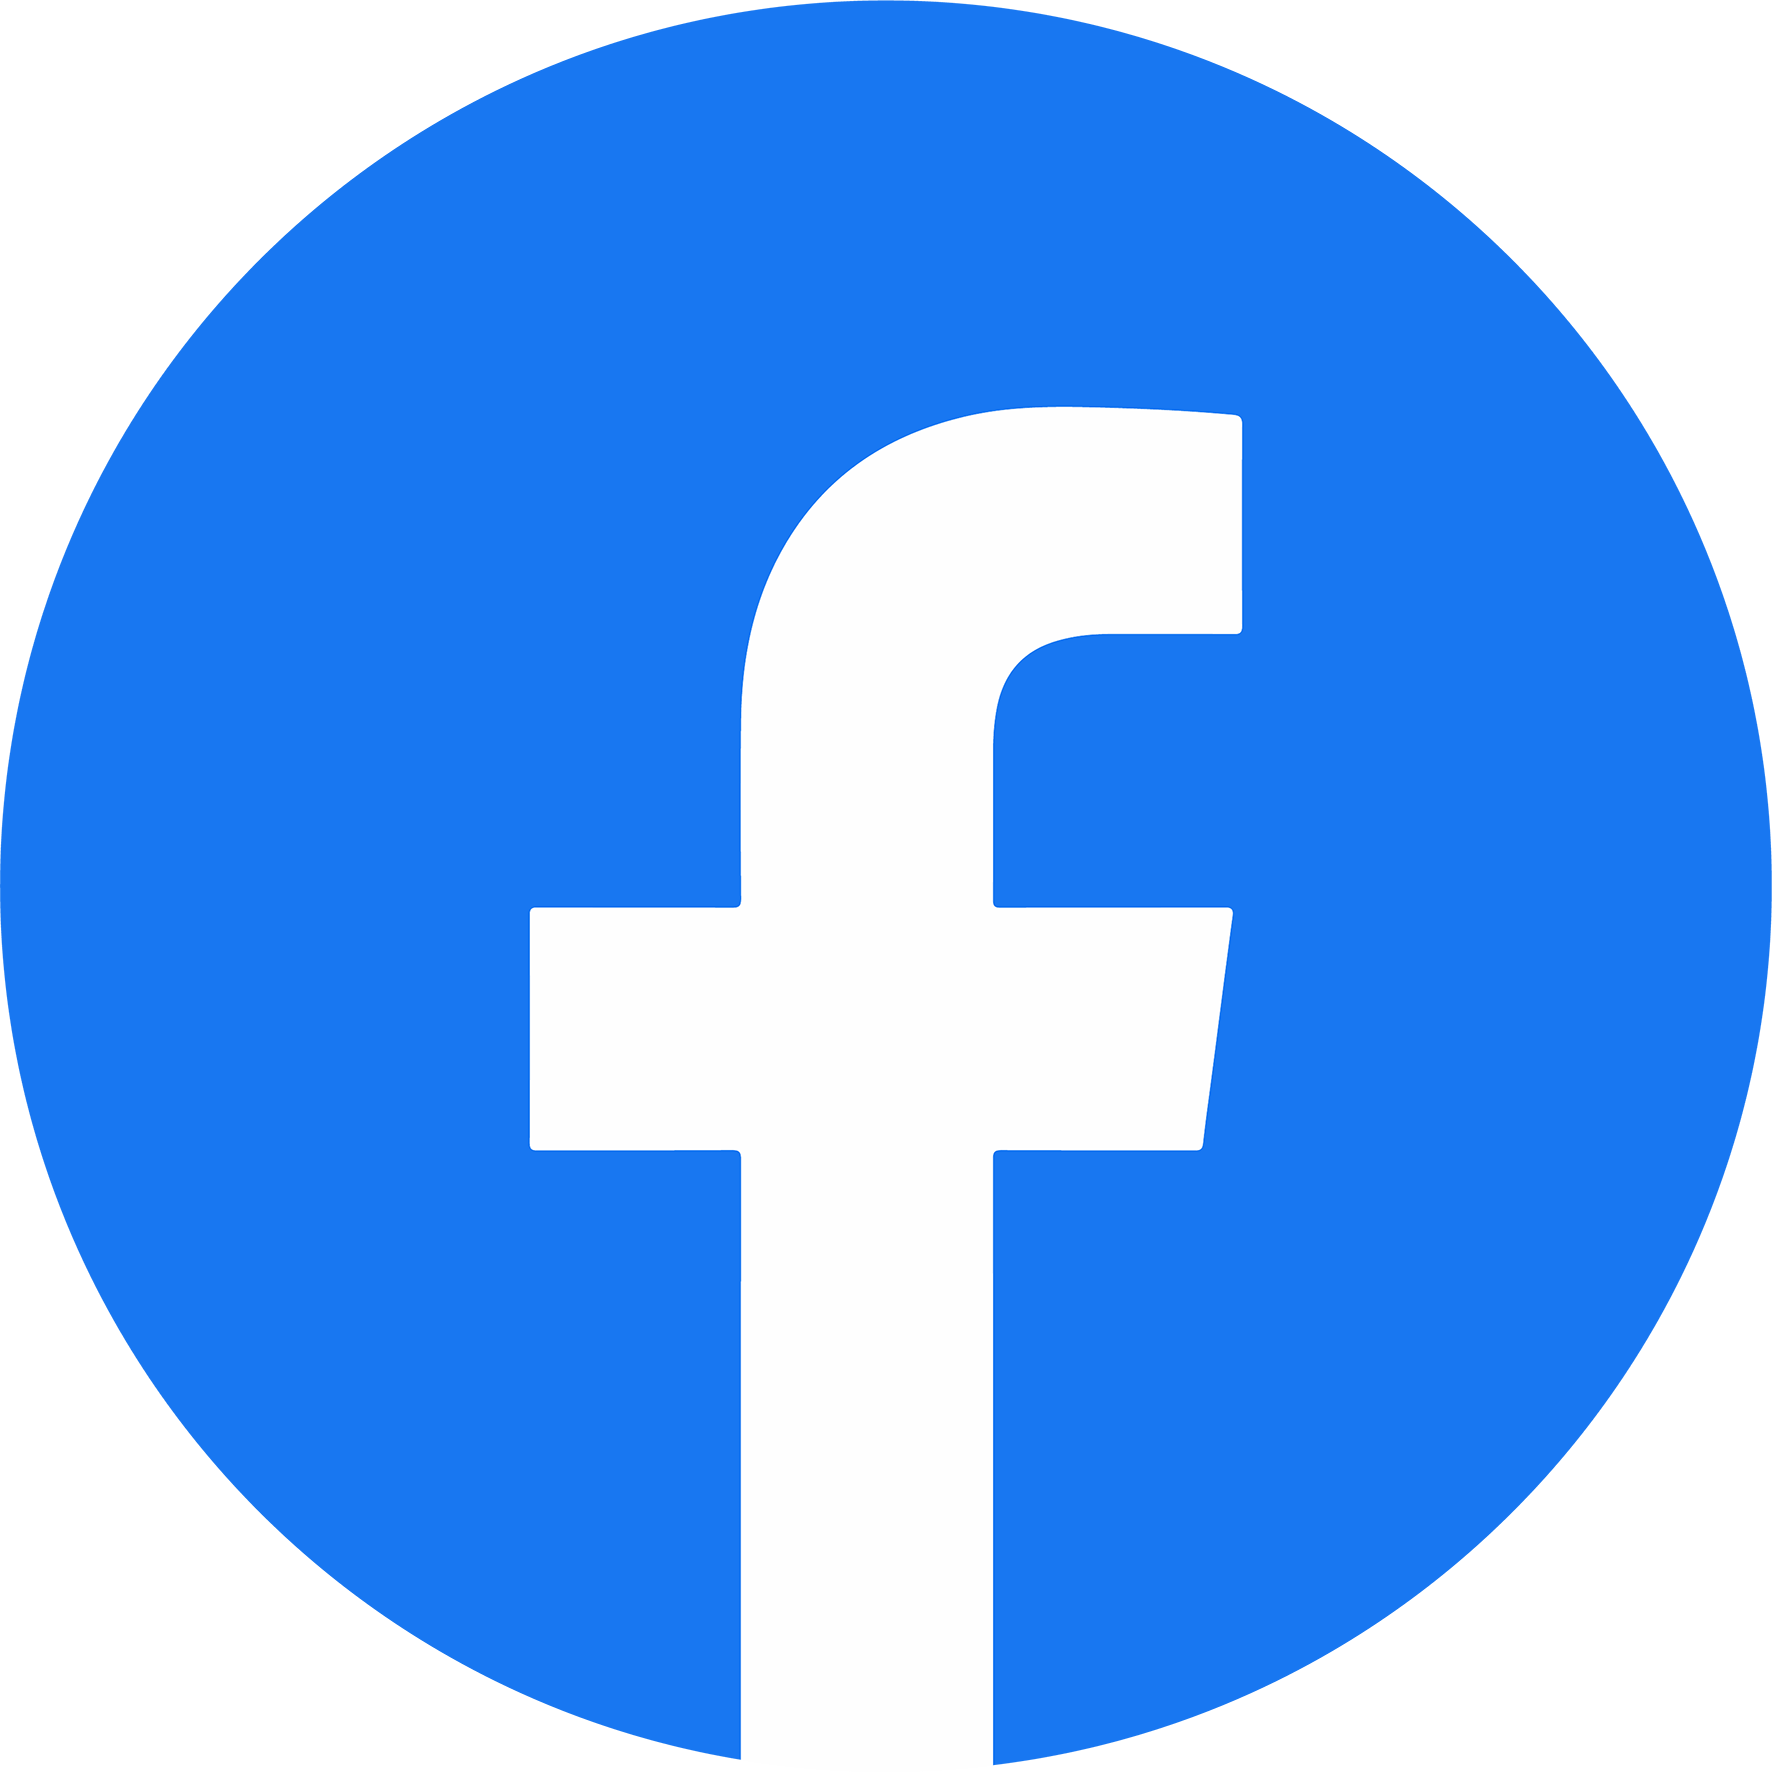 Facebook-logo-2021.png